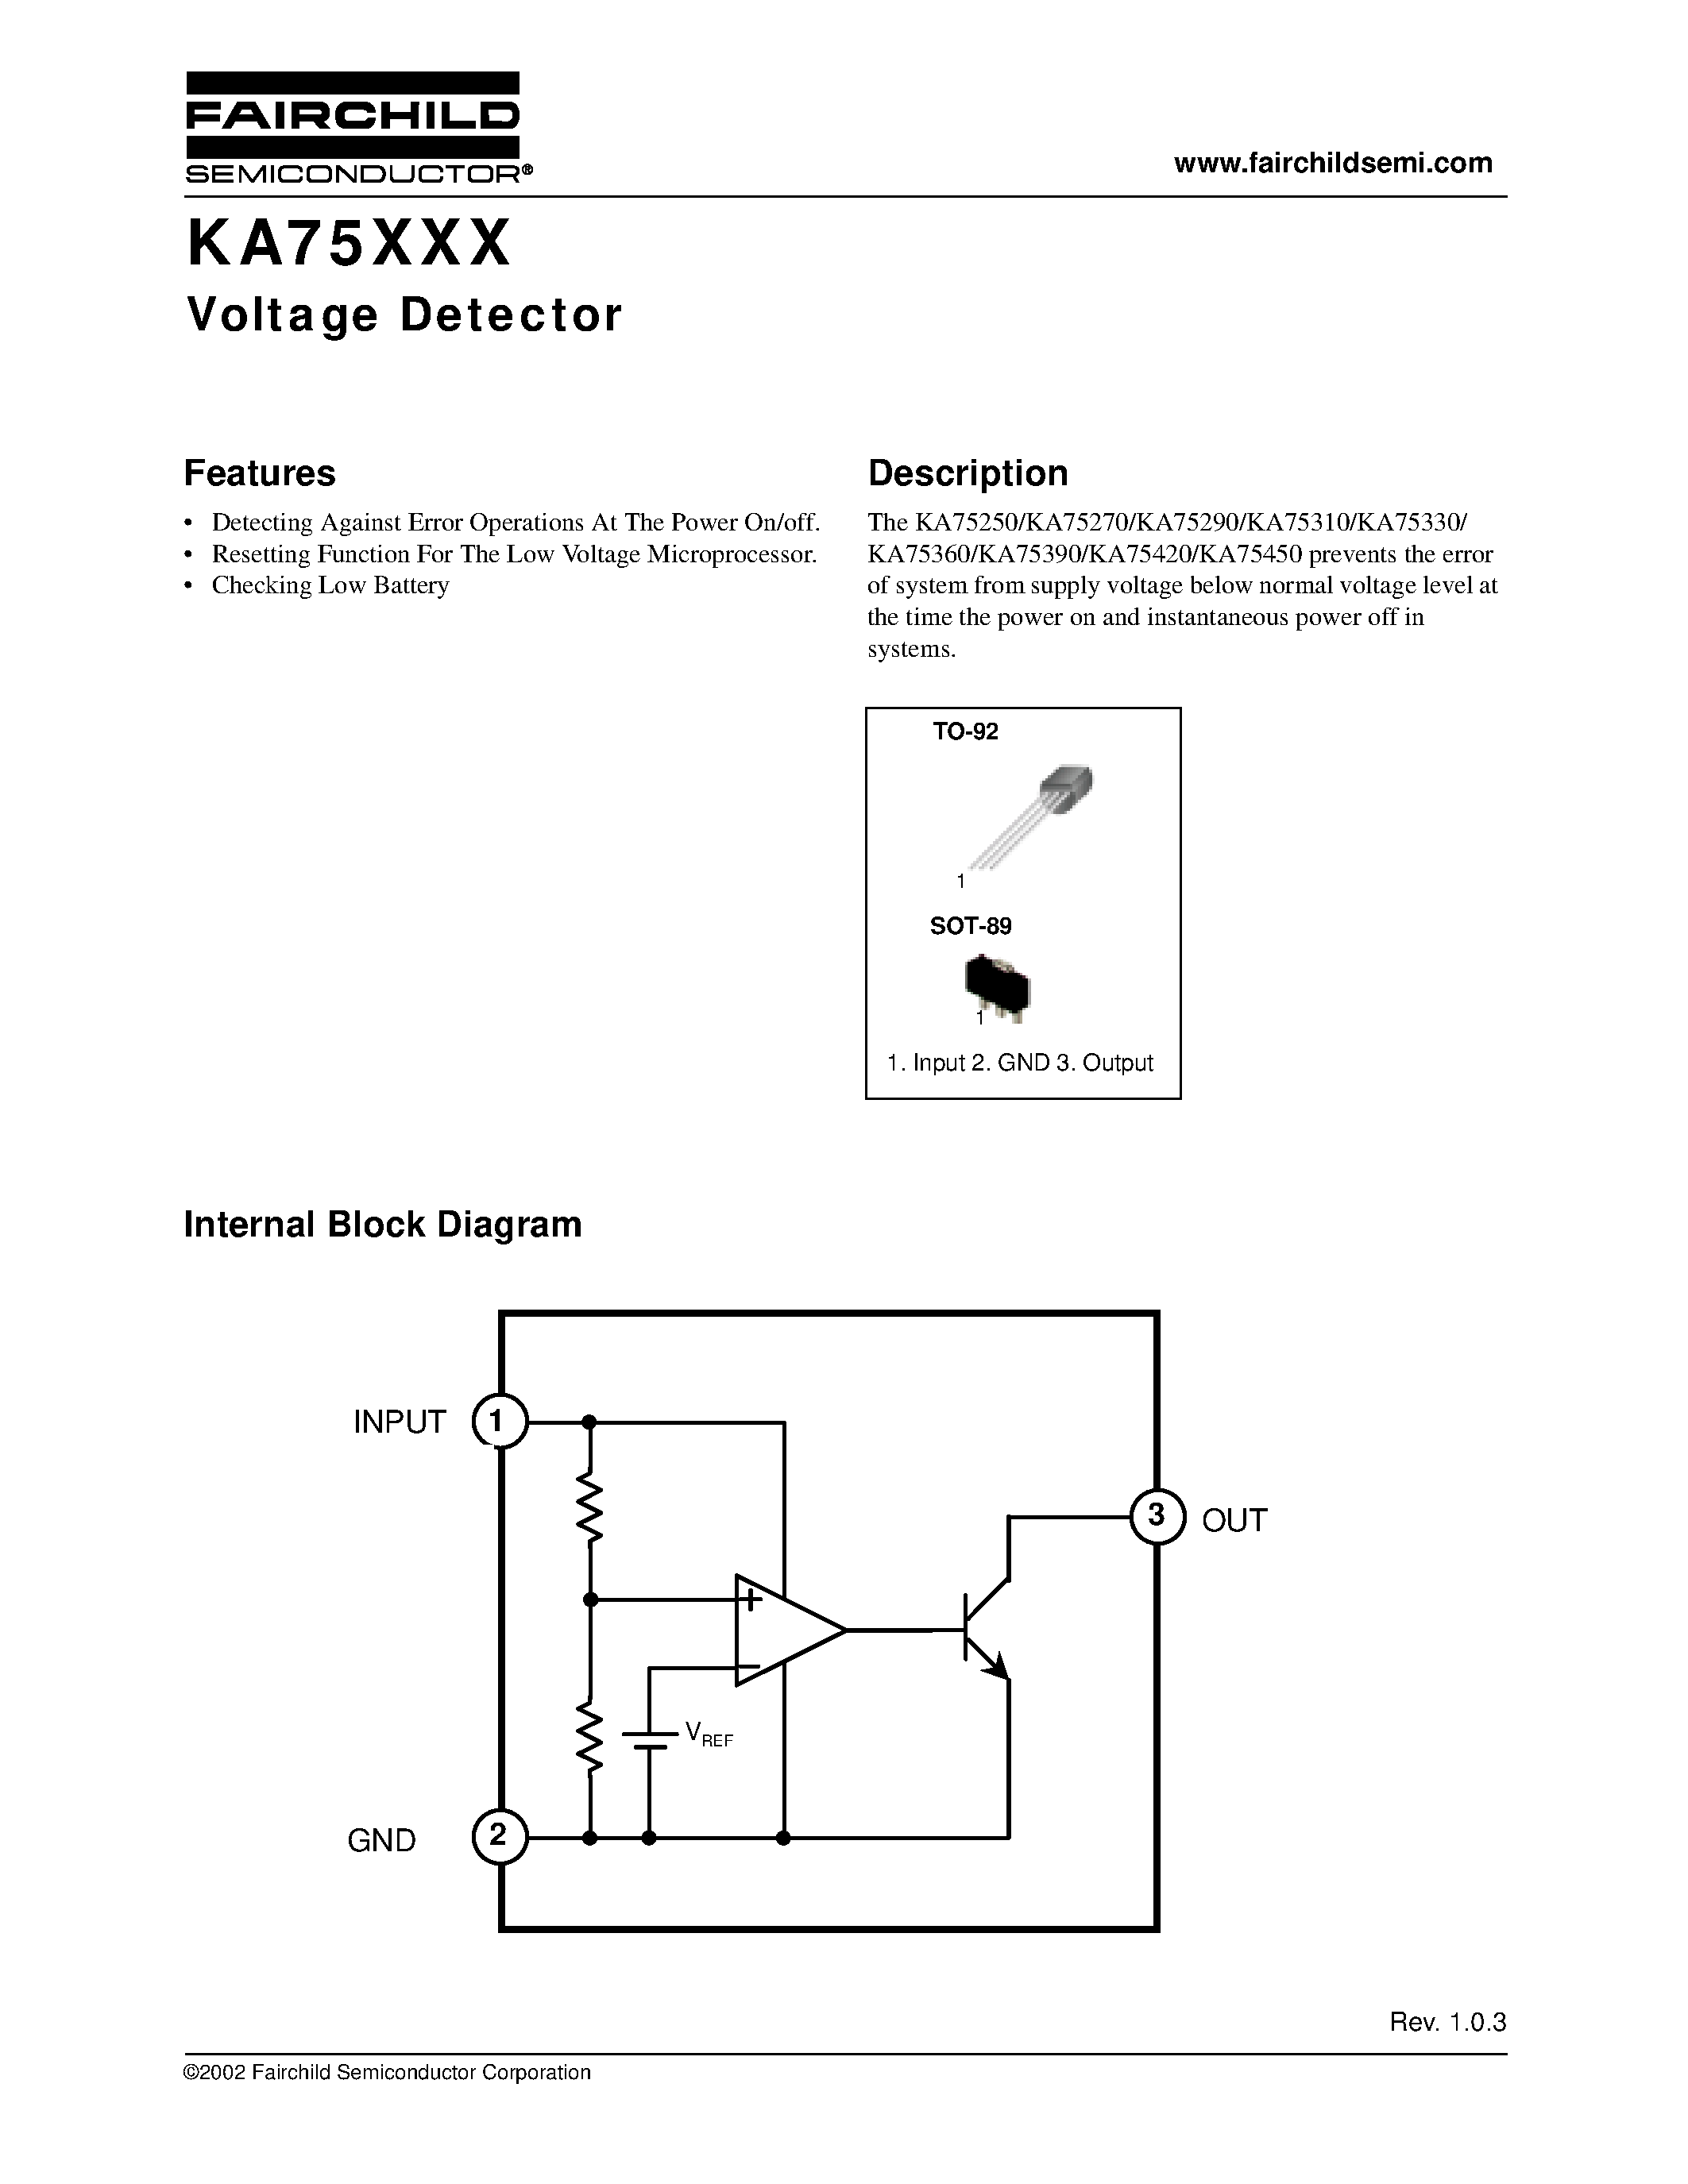 Даташит KA75270 - Voltage Detector страница 1